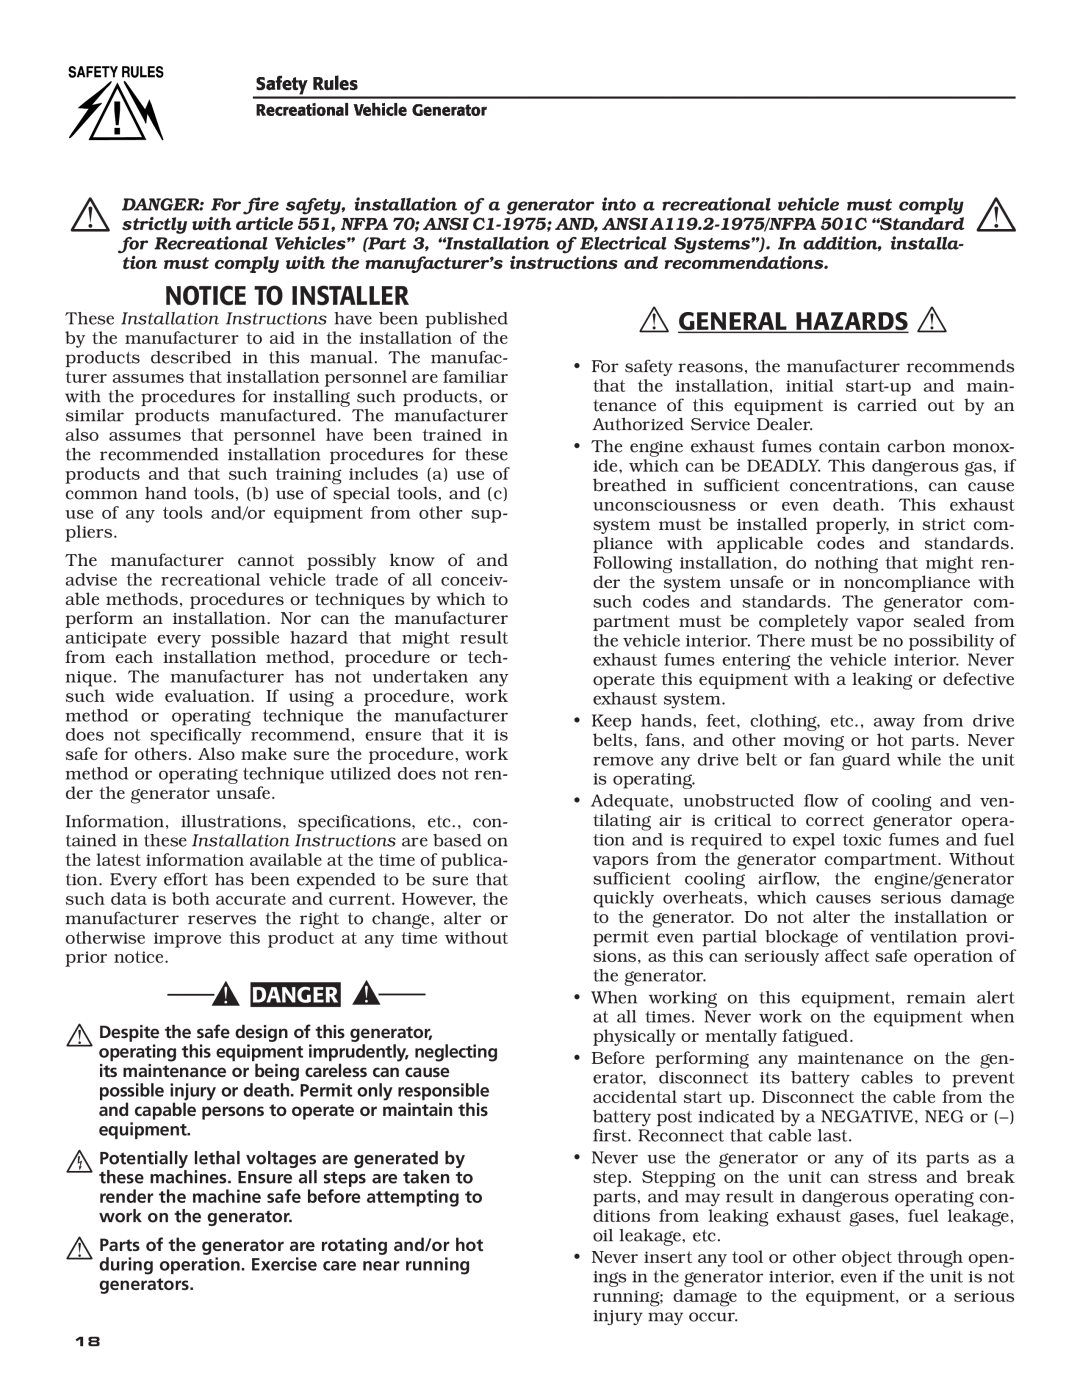 Generac Power Systems 004701-0 owner manual Notice To Installer,  General Hazards, Danger 